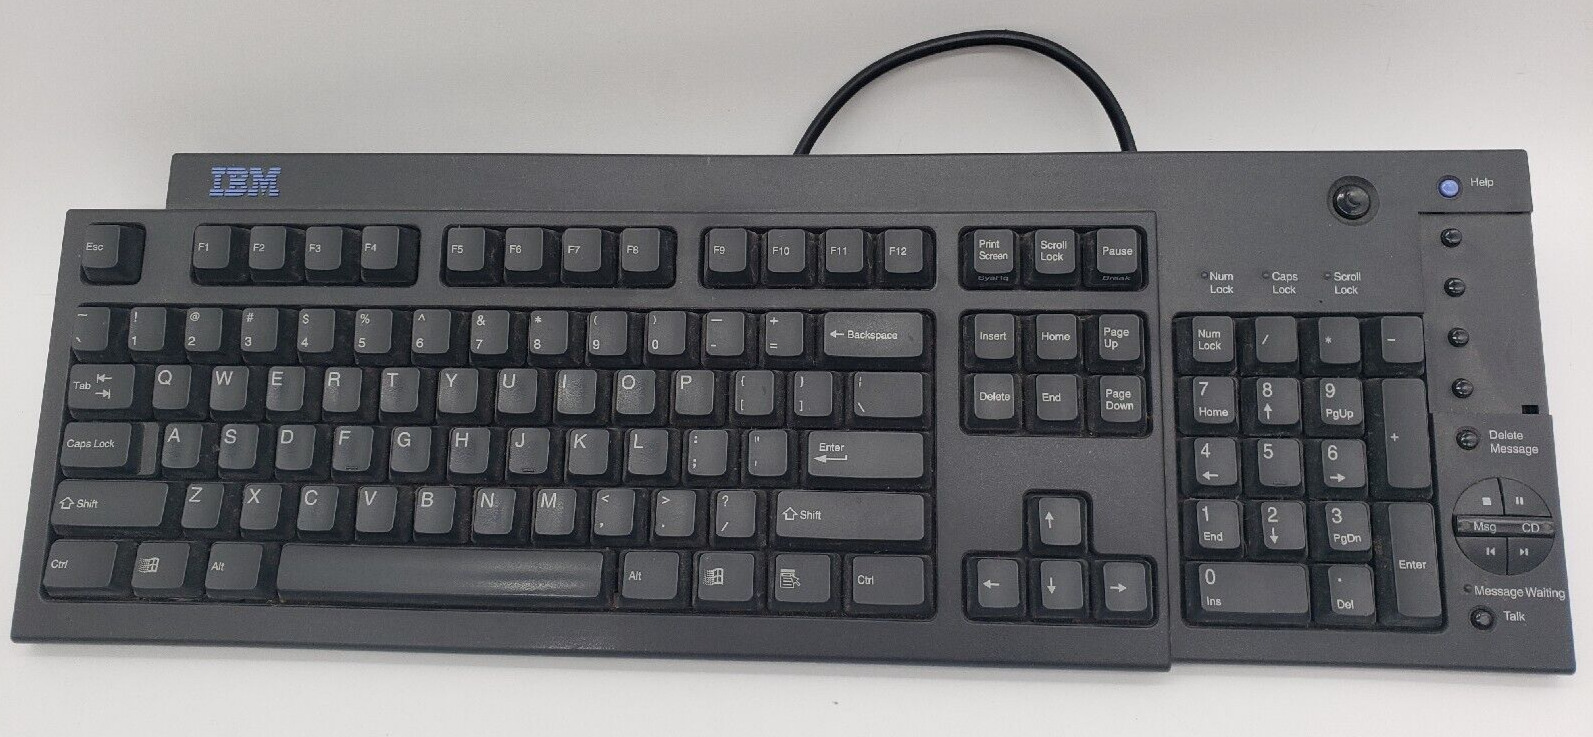 UNTESTED - IBM Wired Keyboard - KB-7993 Black Clicking Keyboard - Vintage